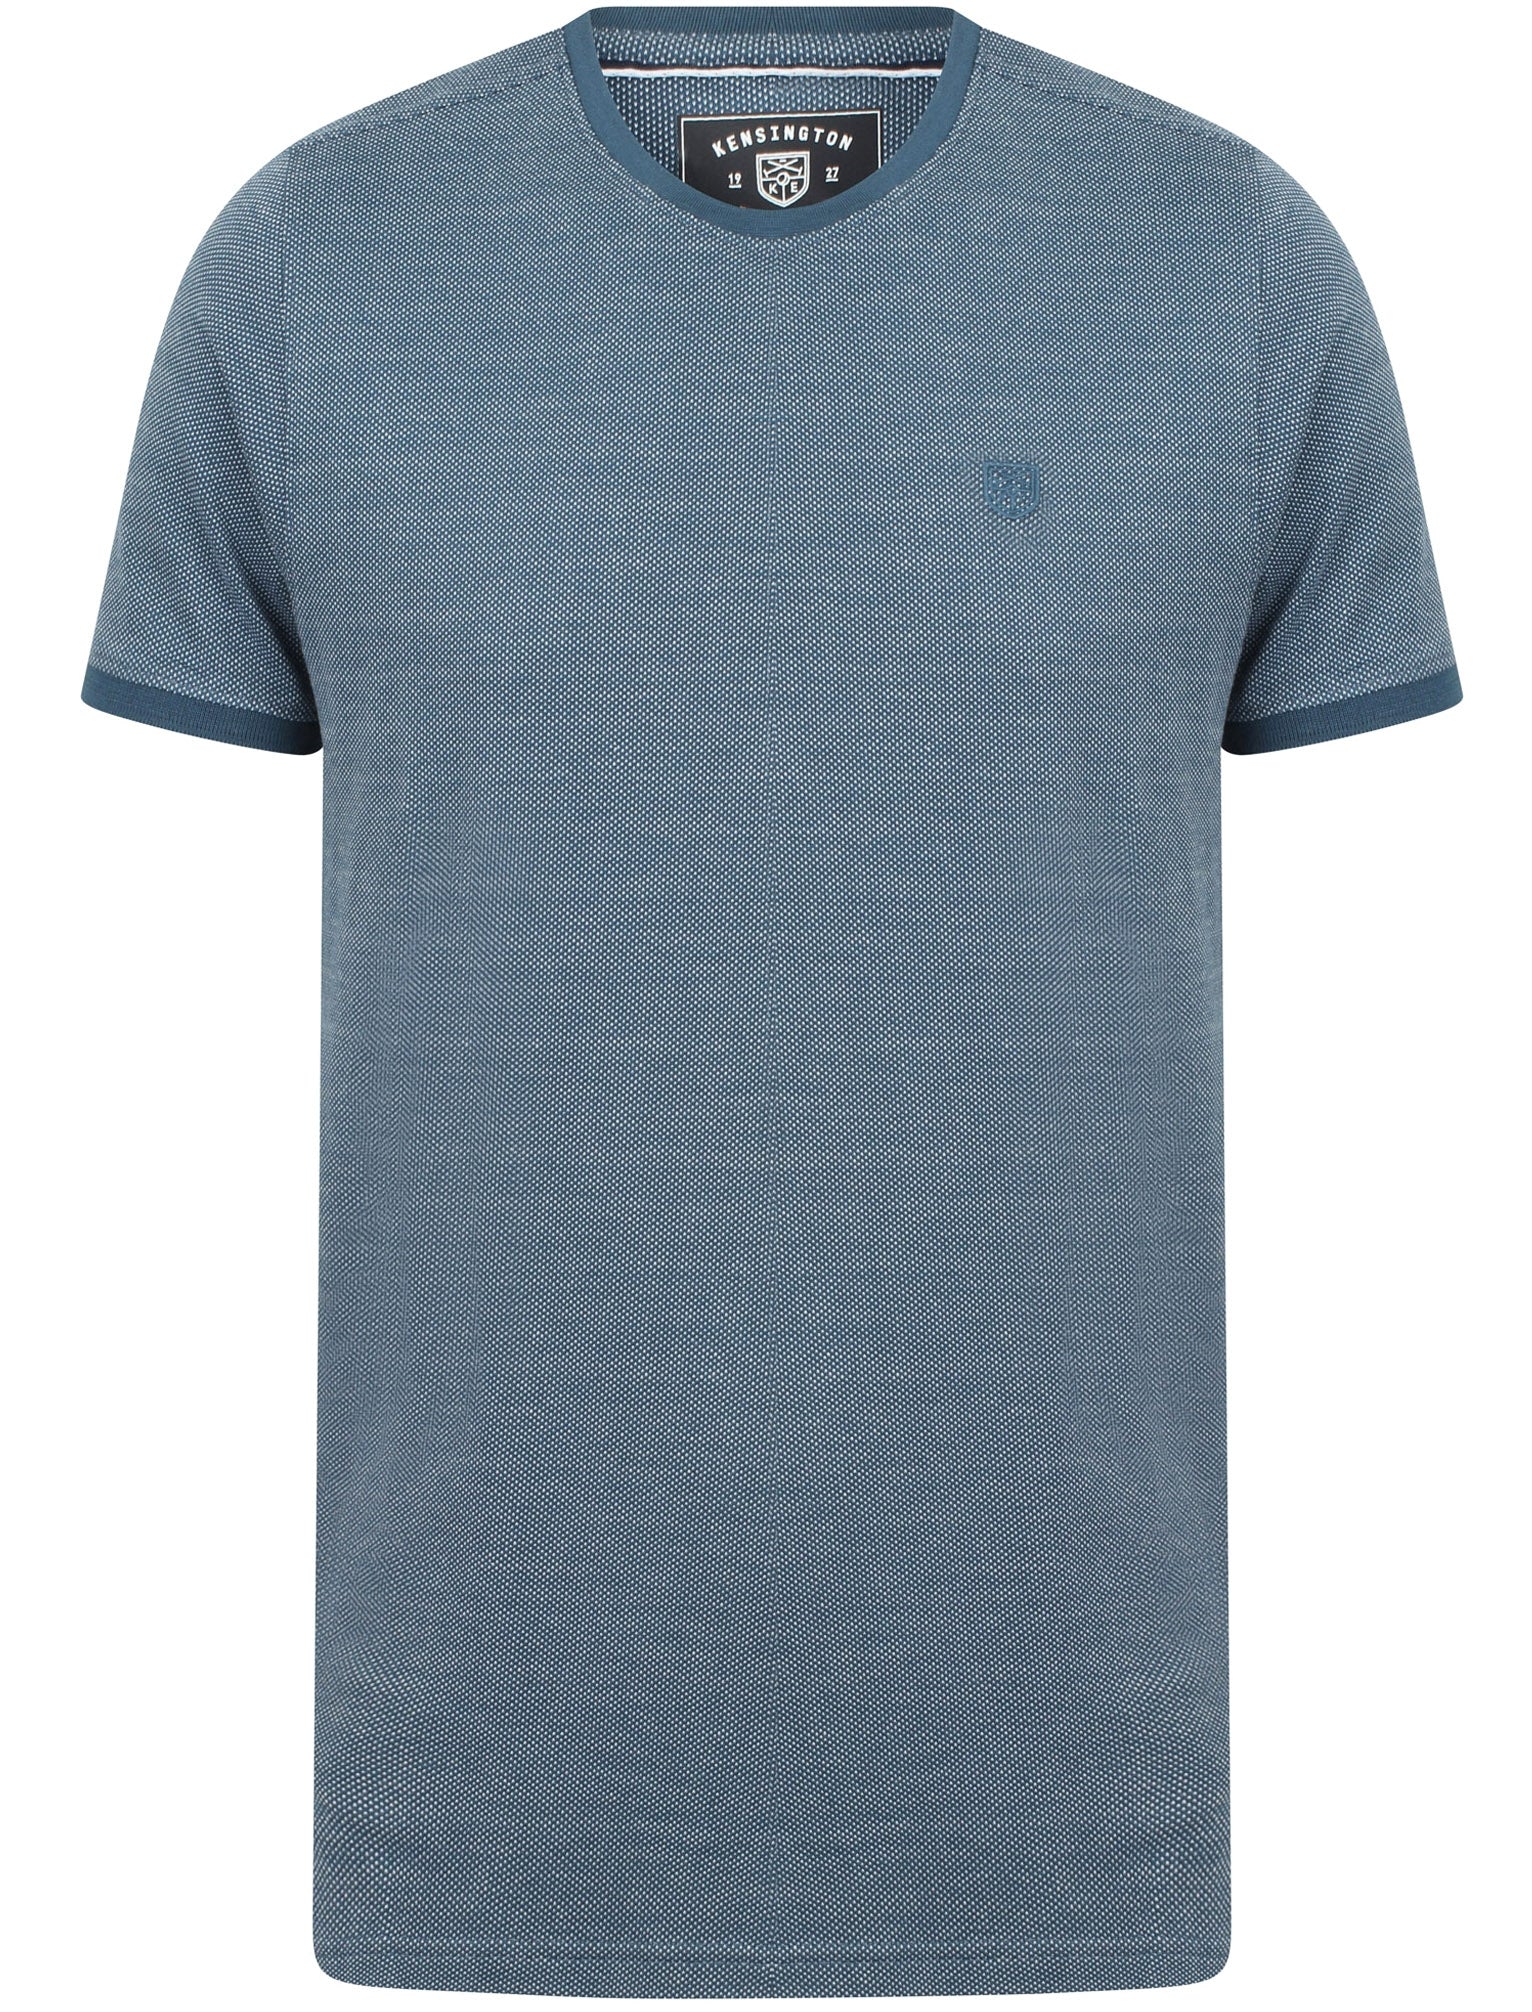 t-shirts murphy jacquard cotton jersey t-shirt in ensign blue - kensington eastside / s - tokyo laundry